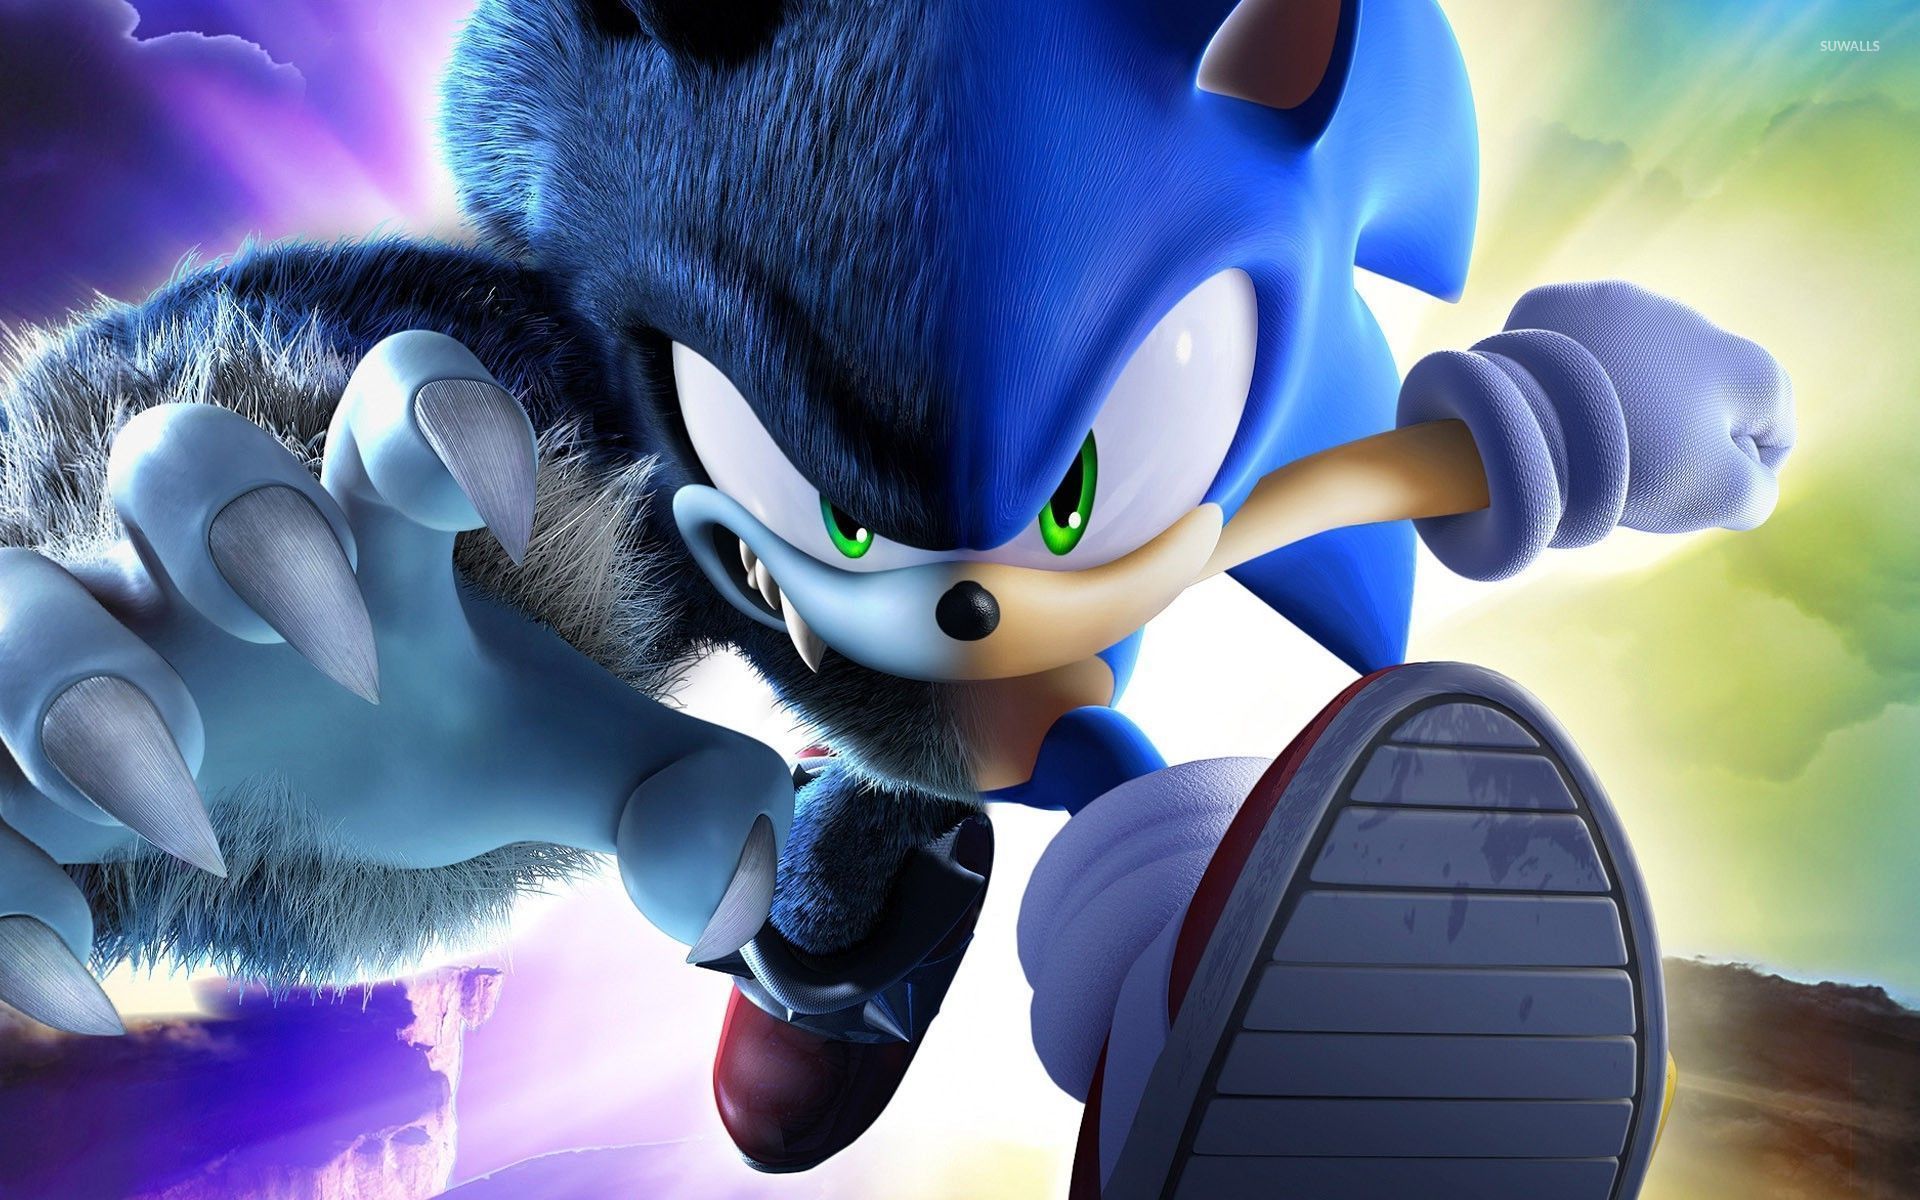 Fondo de pantalla de Angry Sonic the Hedgehog - Fondos de pantalla de juegos - # 52406